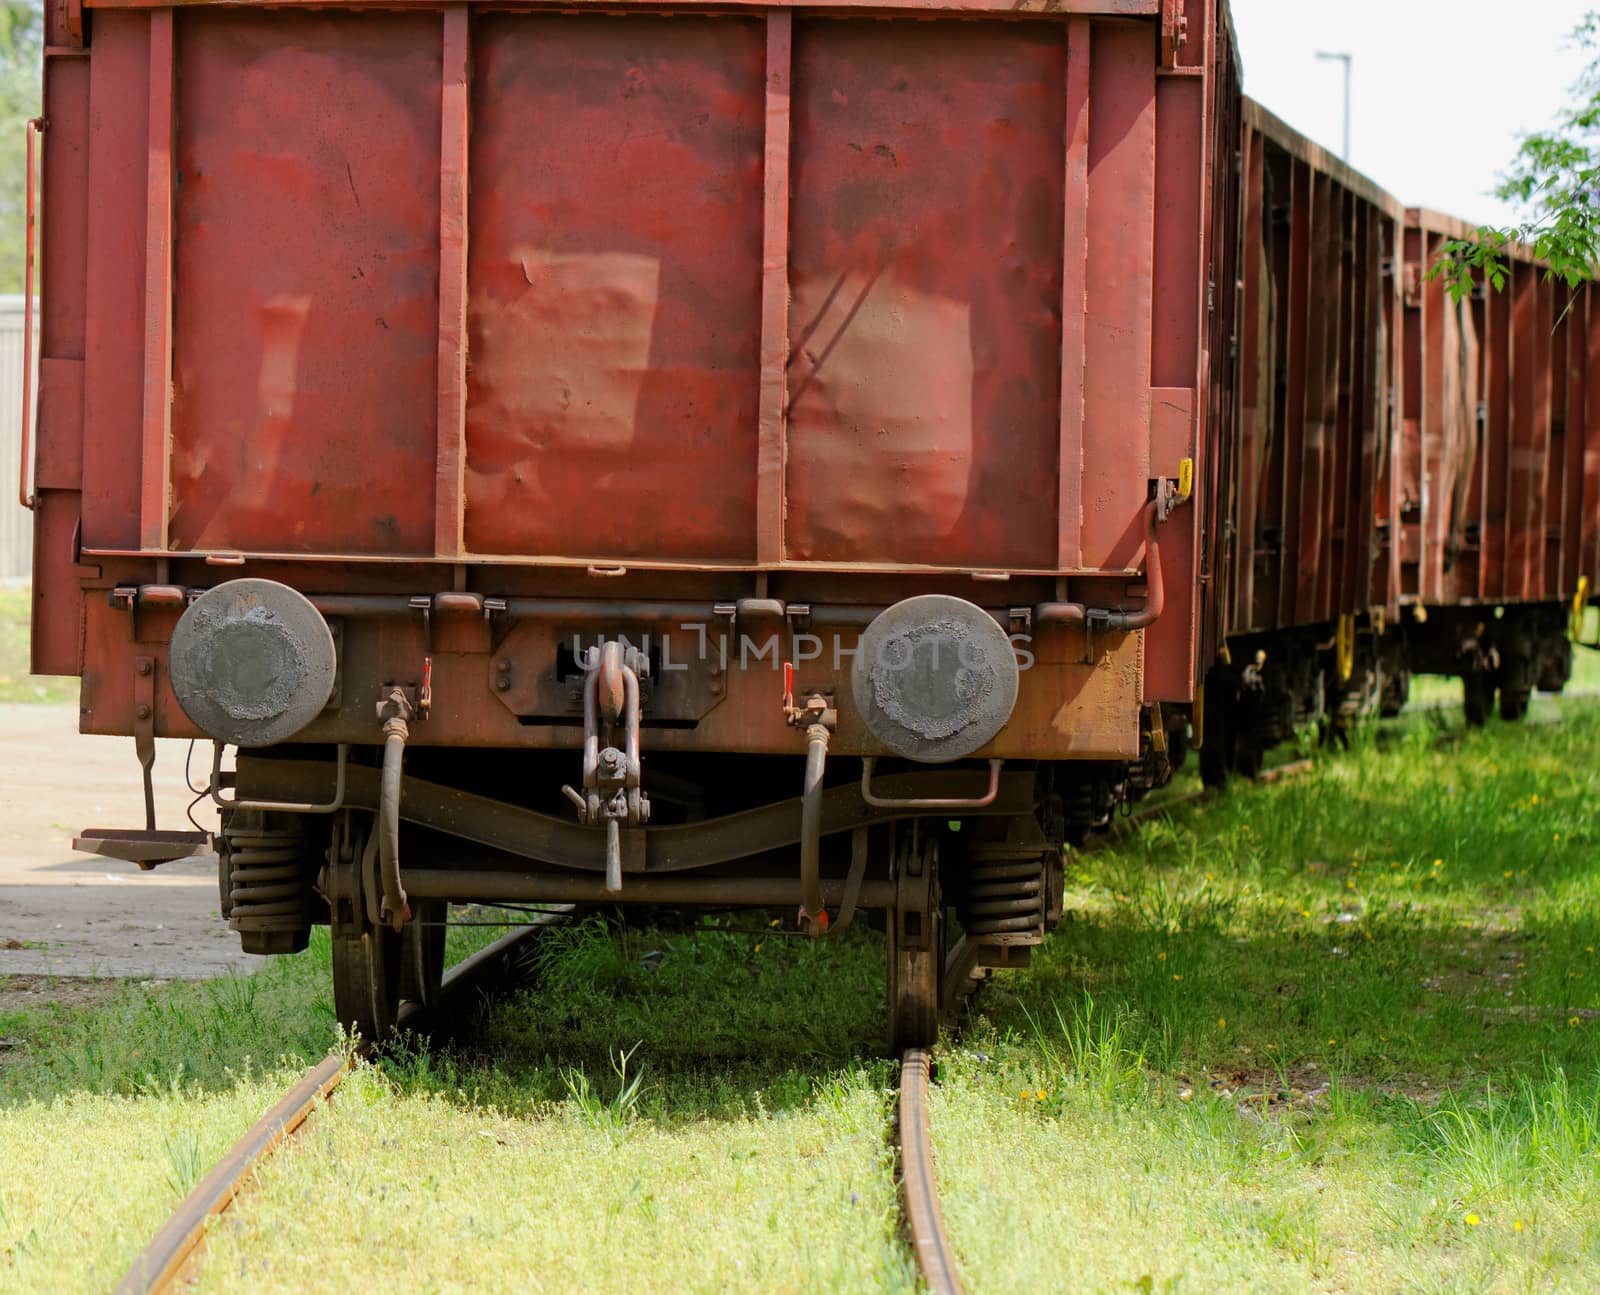 Old wagon, in an unused railway track by NagyDodo